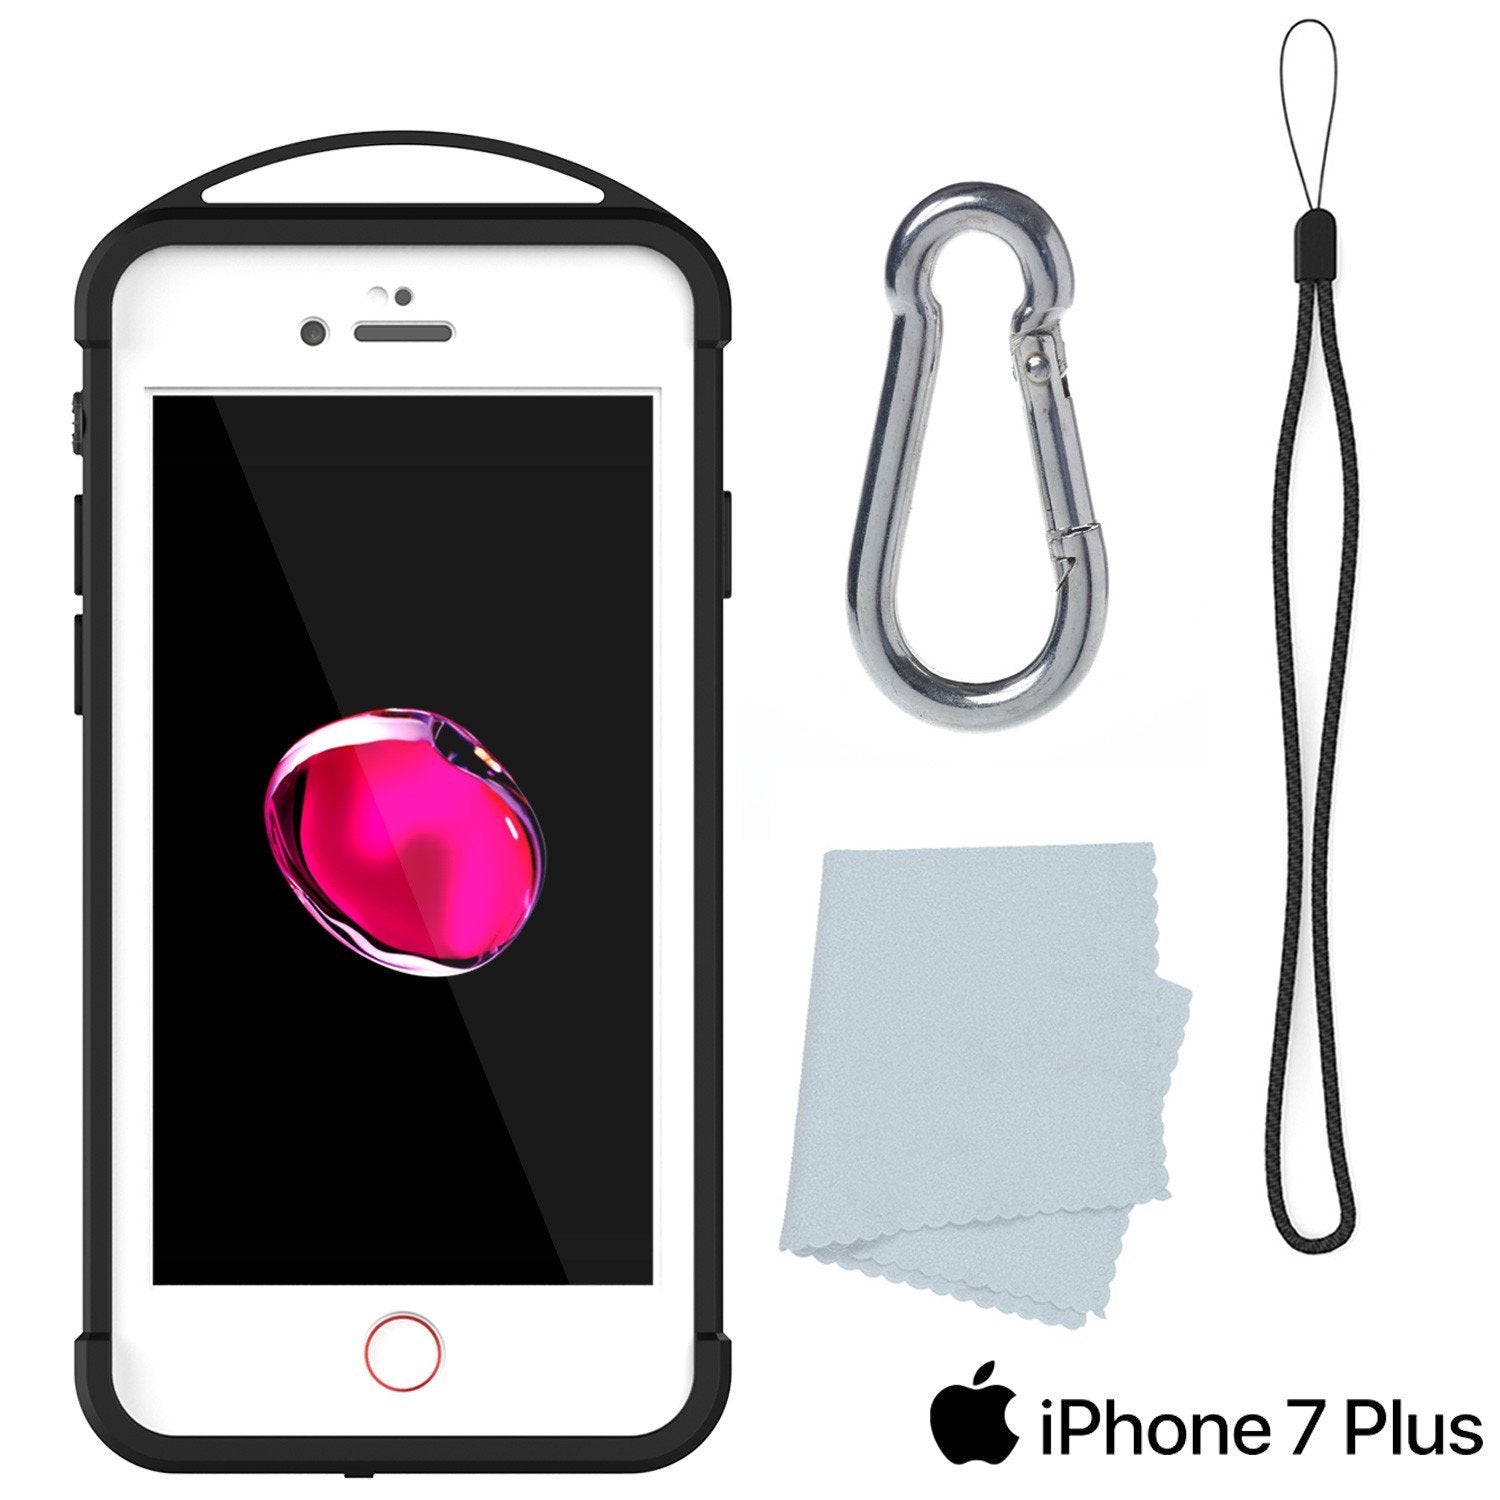 iPhone 8+ Plus Waterproof Case, Punkcase ALPINE Series, CLEAR | Heavy Duty Armor Cover